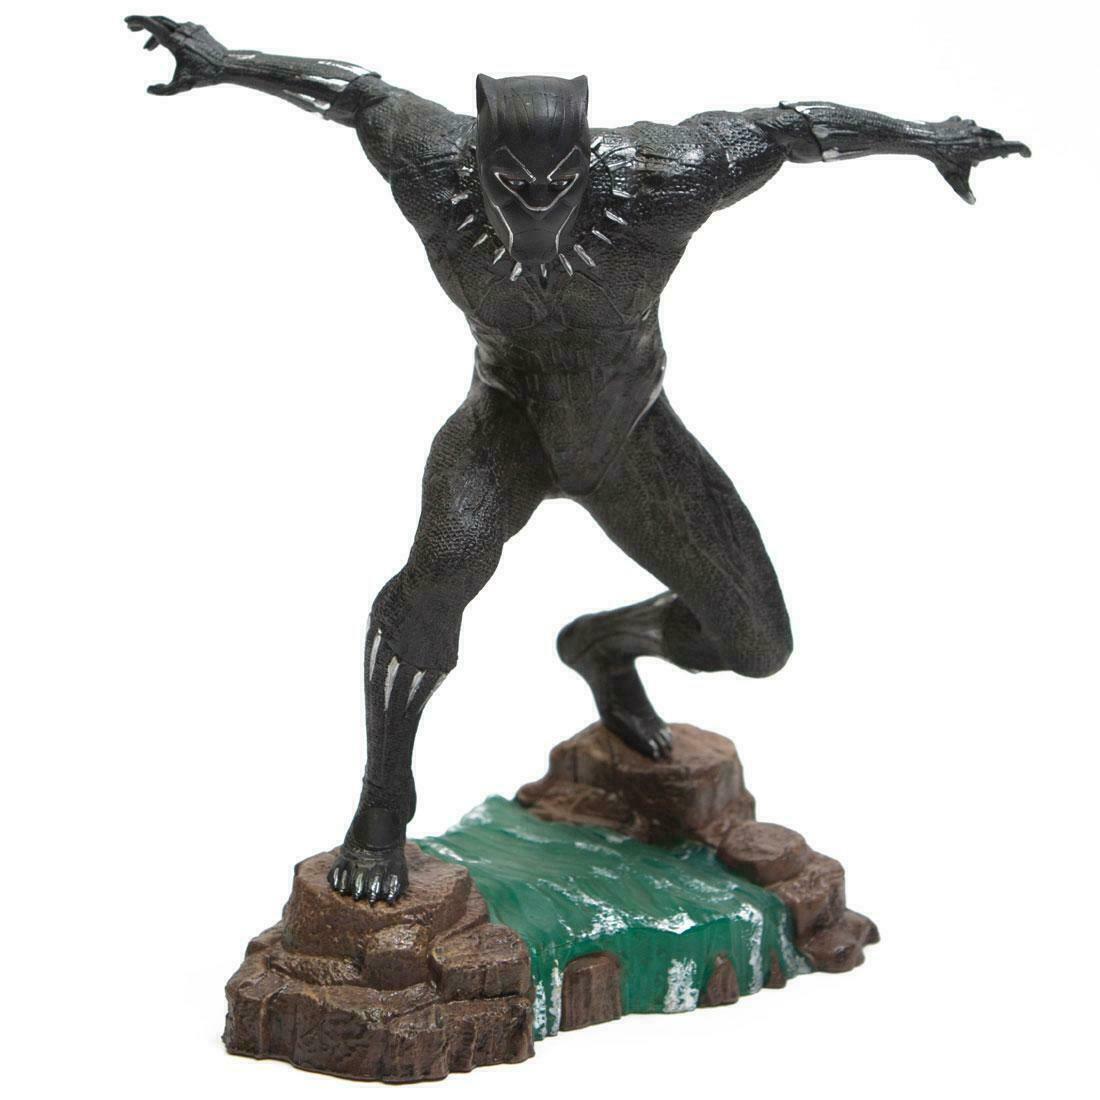 Black Panther movie Marvel Gallery PVC figure / statue